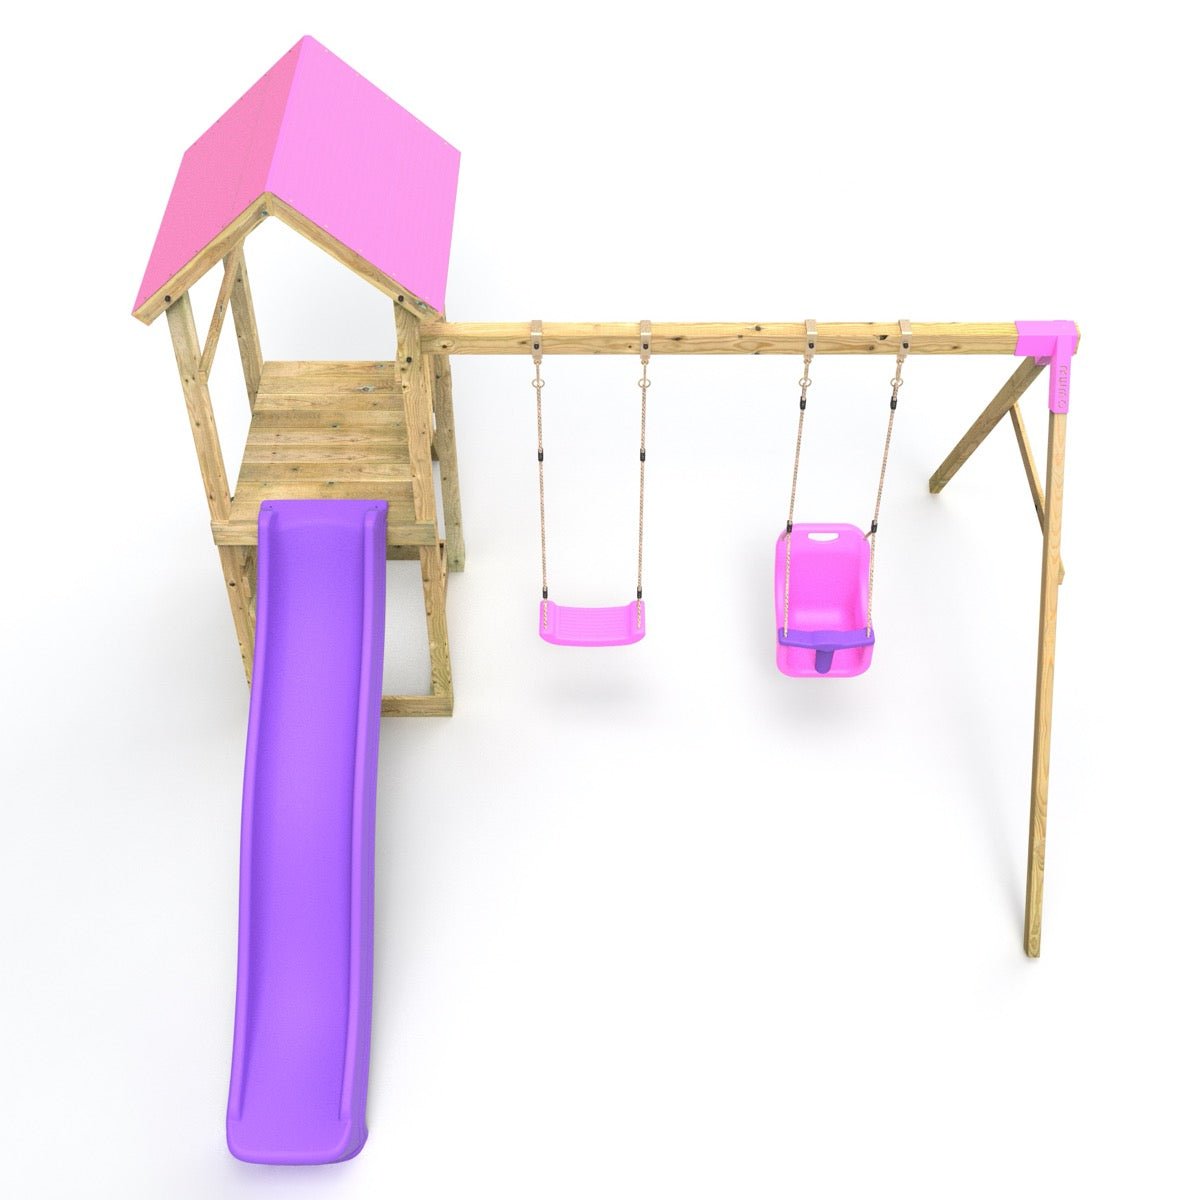 Rebo Adventure Wooden Climbing Frame, Swing Set and Slide - Rainier Pink